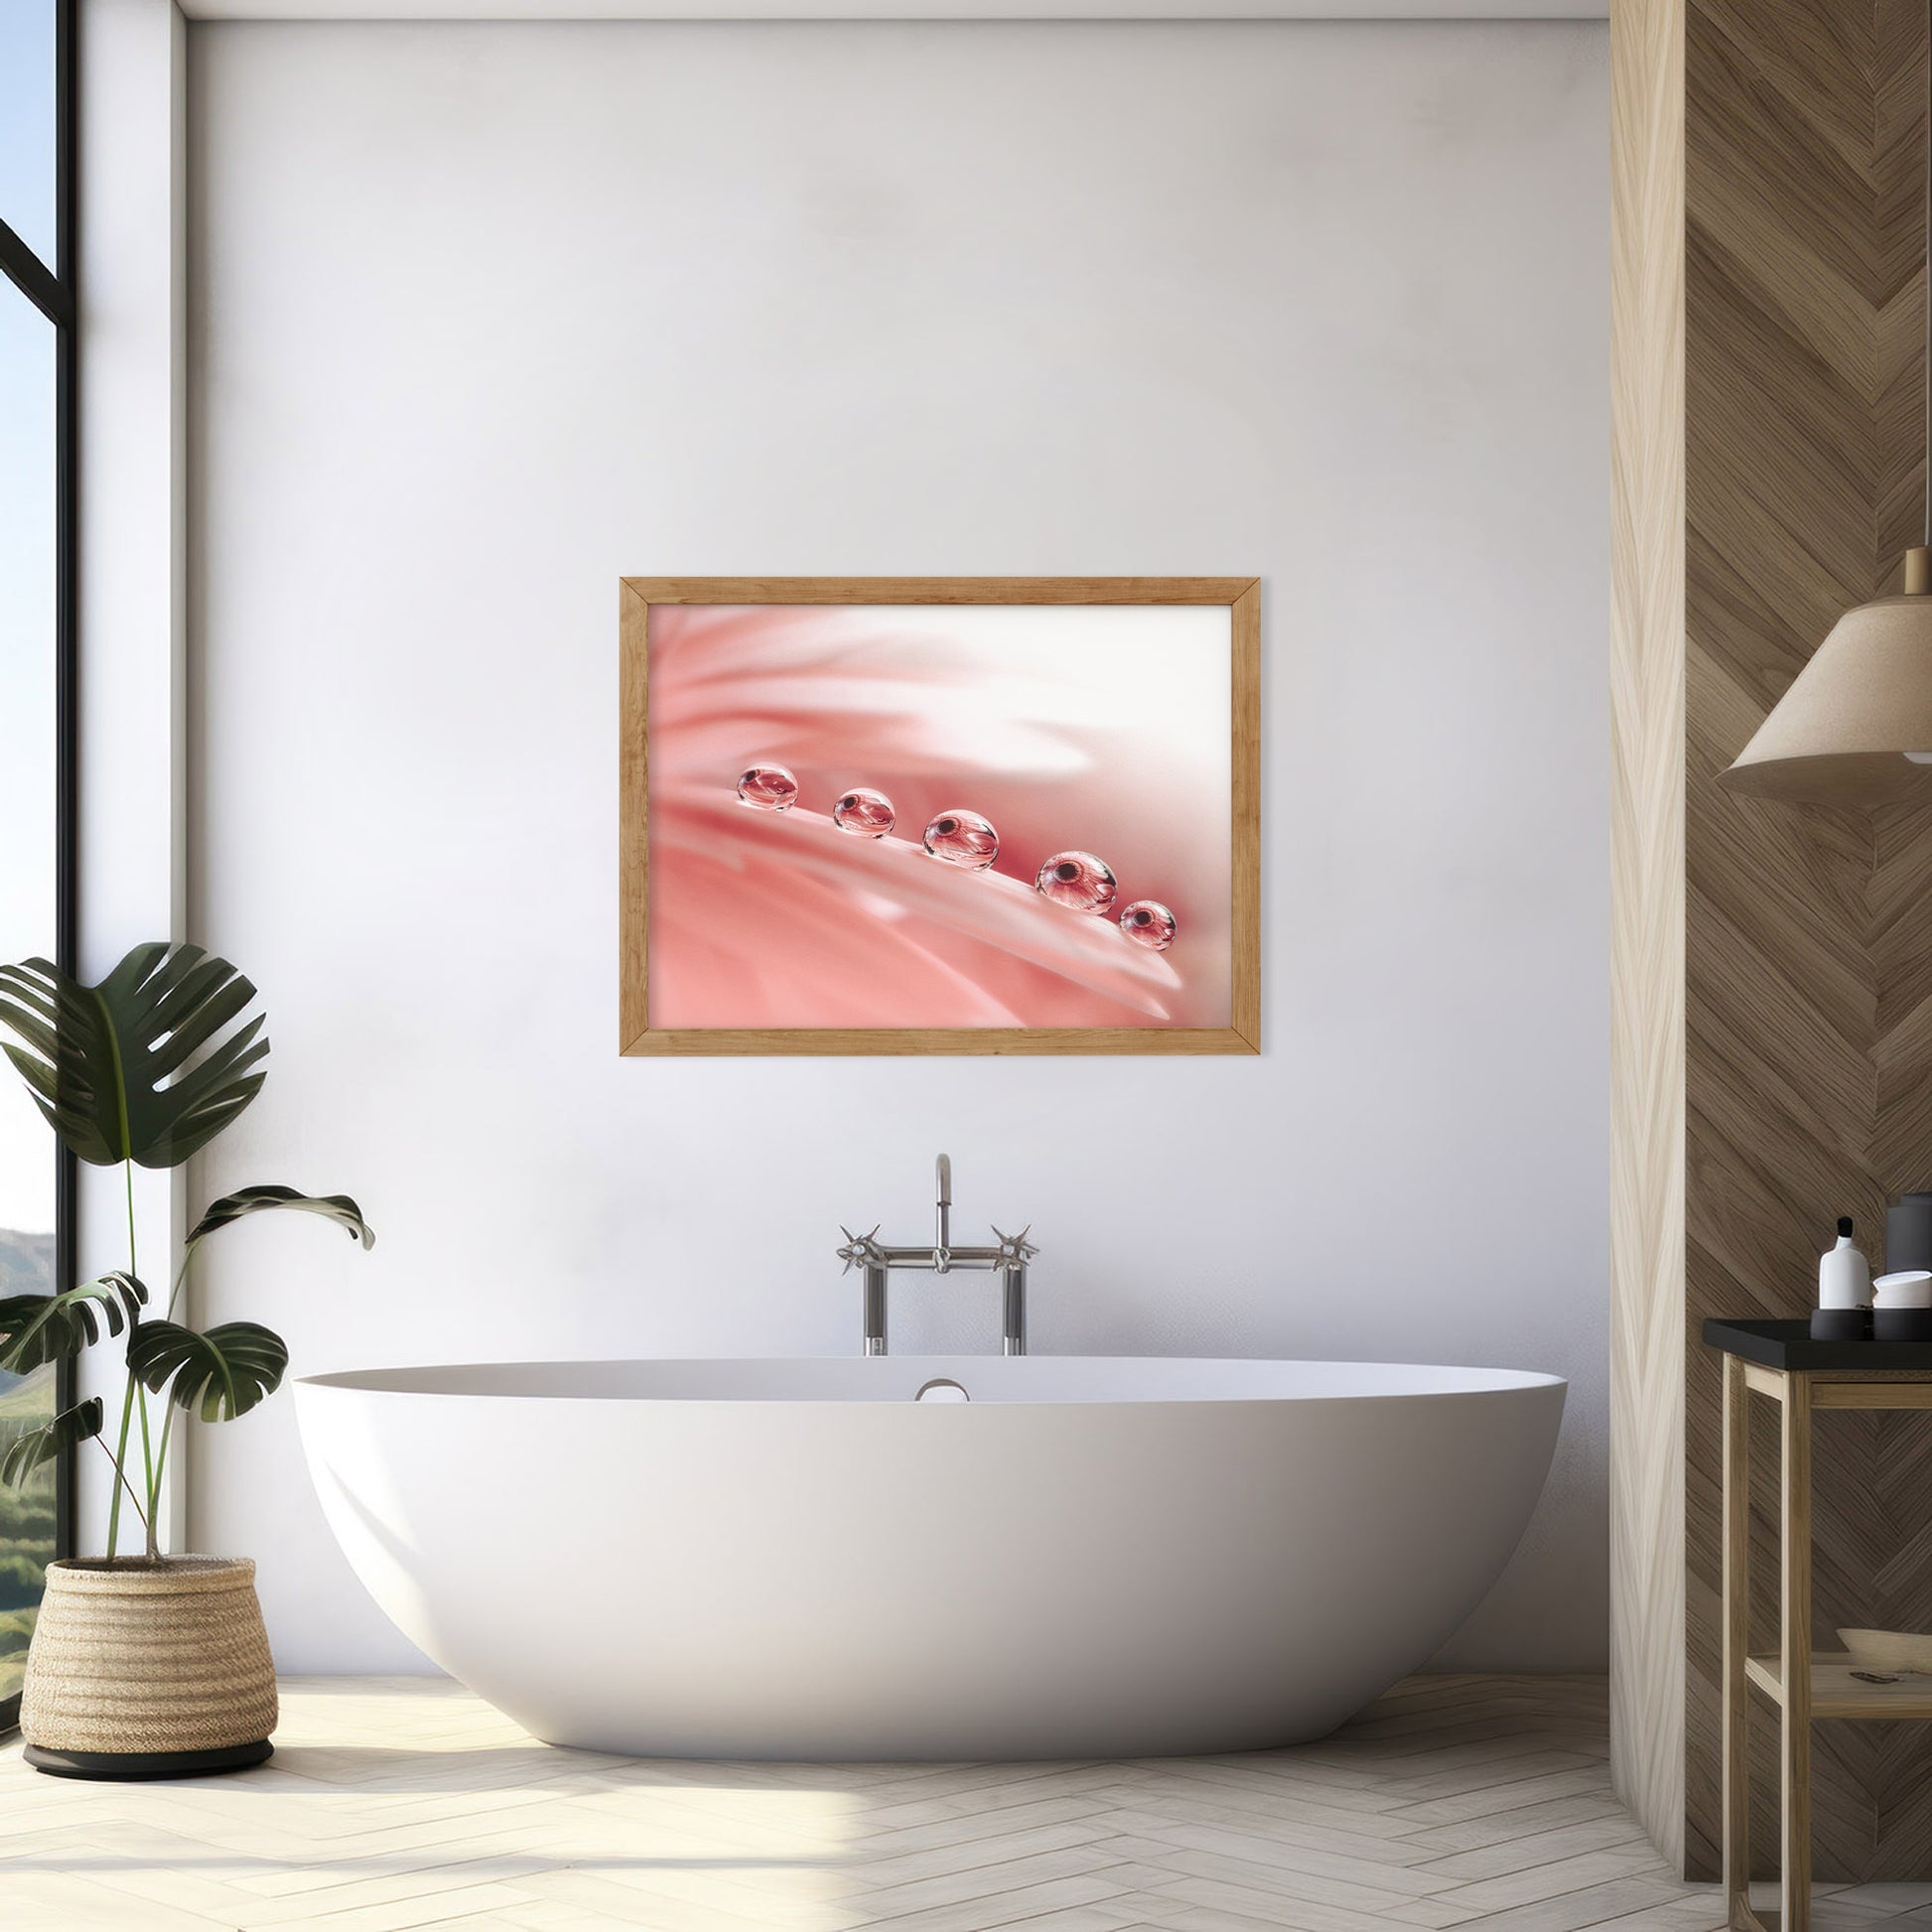 Best Bathroom Artwork: Peace - Dew Drops on Gerbera Daisy Petals Floral Botanical Photograph Shabby Chic - Vintage Loose / Unframed Wall Art Print